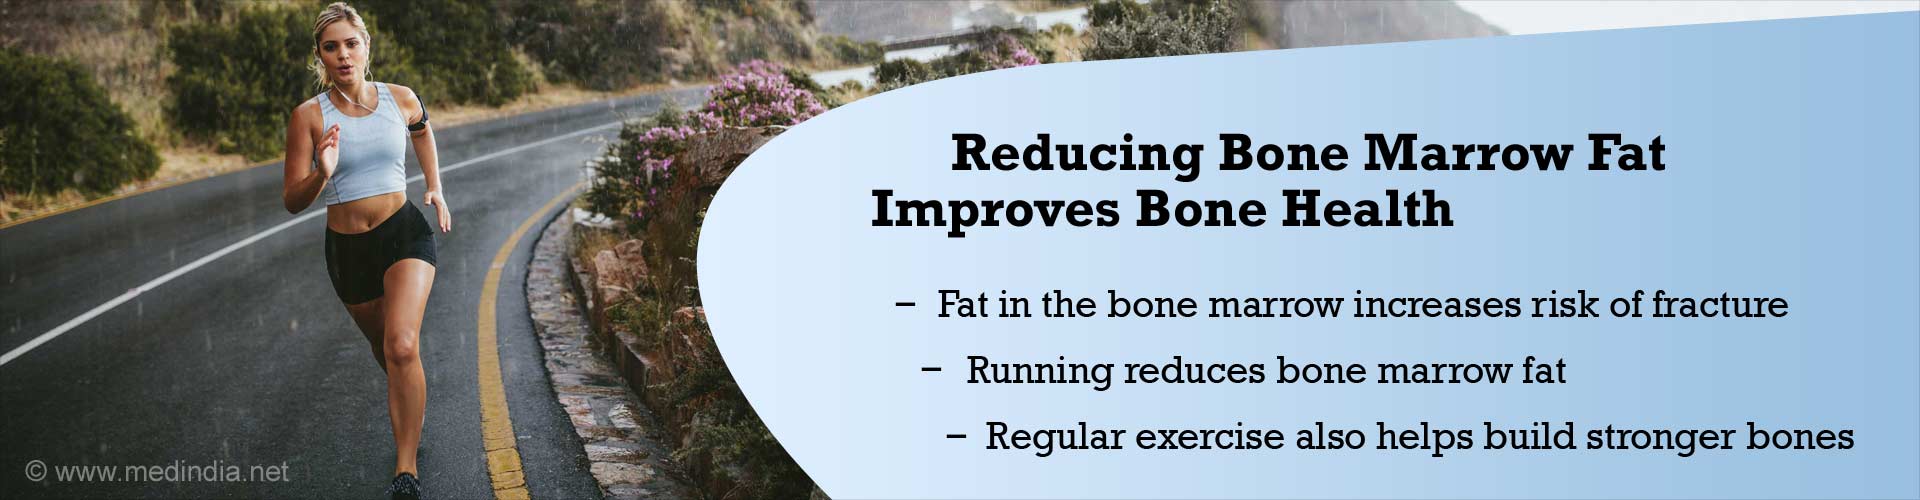 Reducing bone marrow fat improves bone health
- Fat in the bone marrow increases risk of fracture
- Running reduces bone marrow fat
- Regular exercise also helps build stronger bones